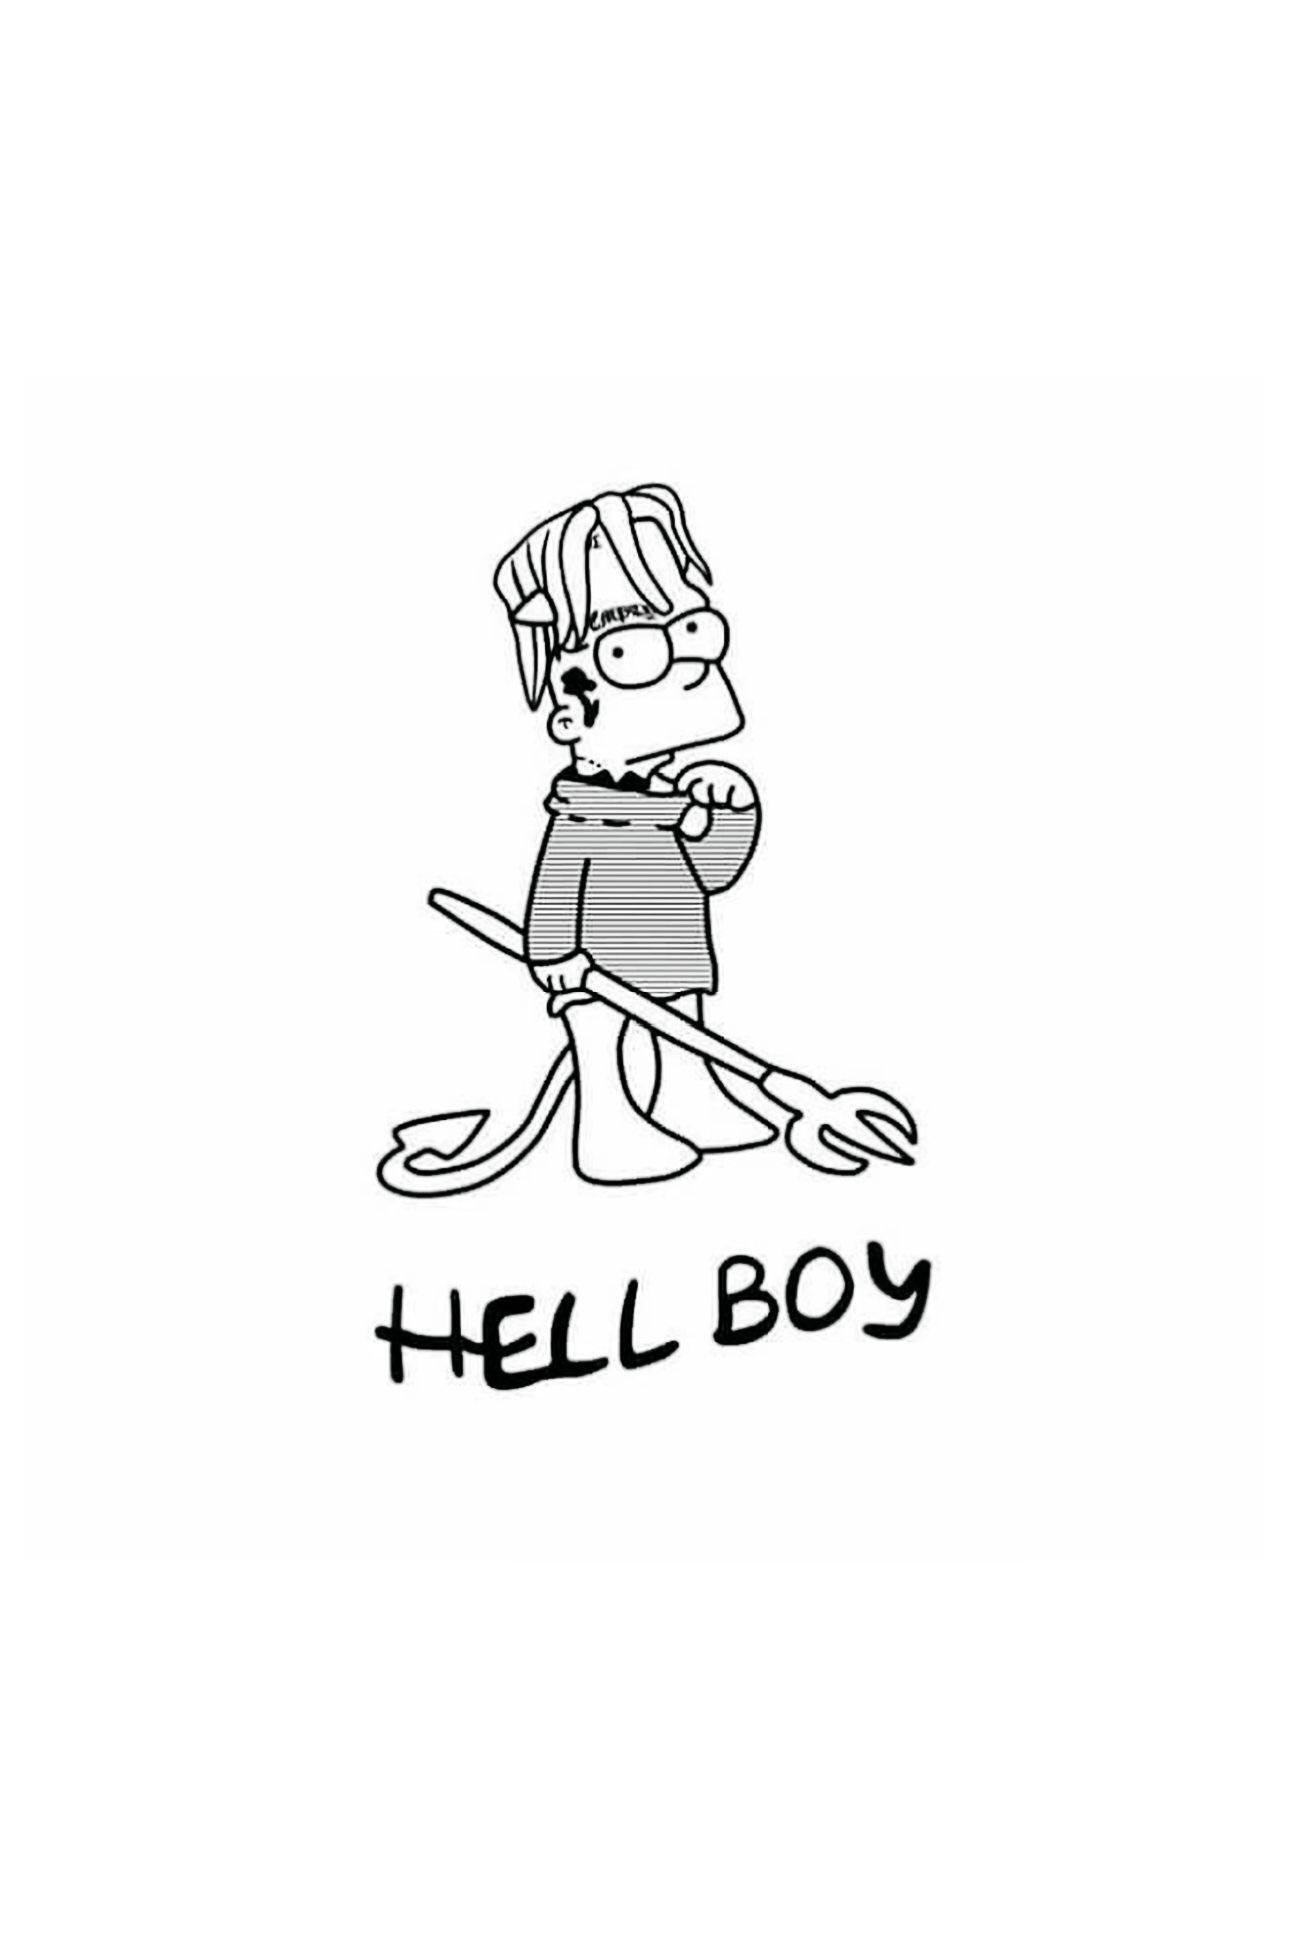 Hellboy (Lil Peep x Bart). Wallpaper [Fits all phone sizes]